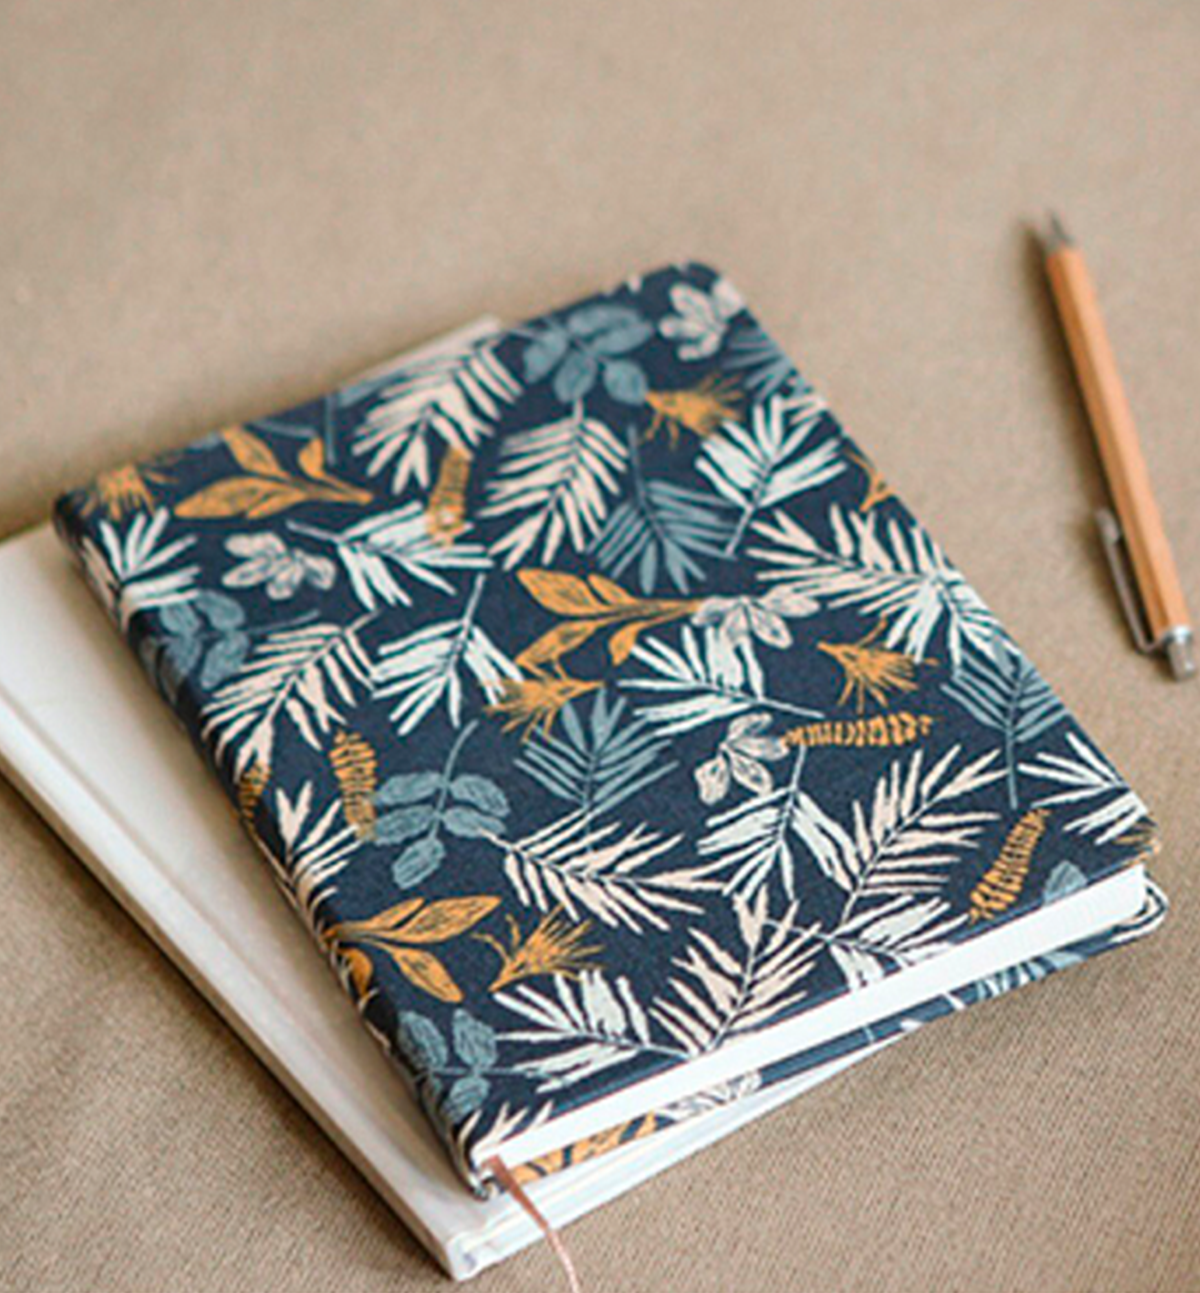 Azure Leaf Fabric Notebook